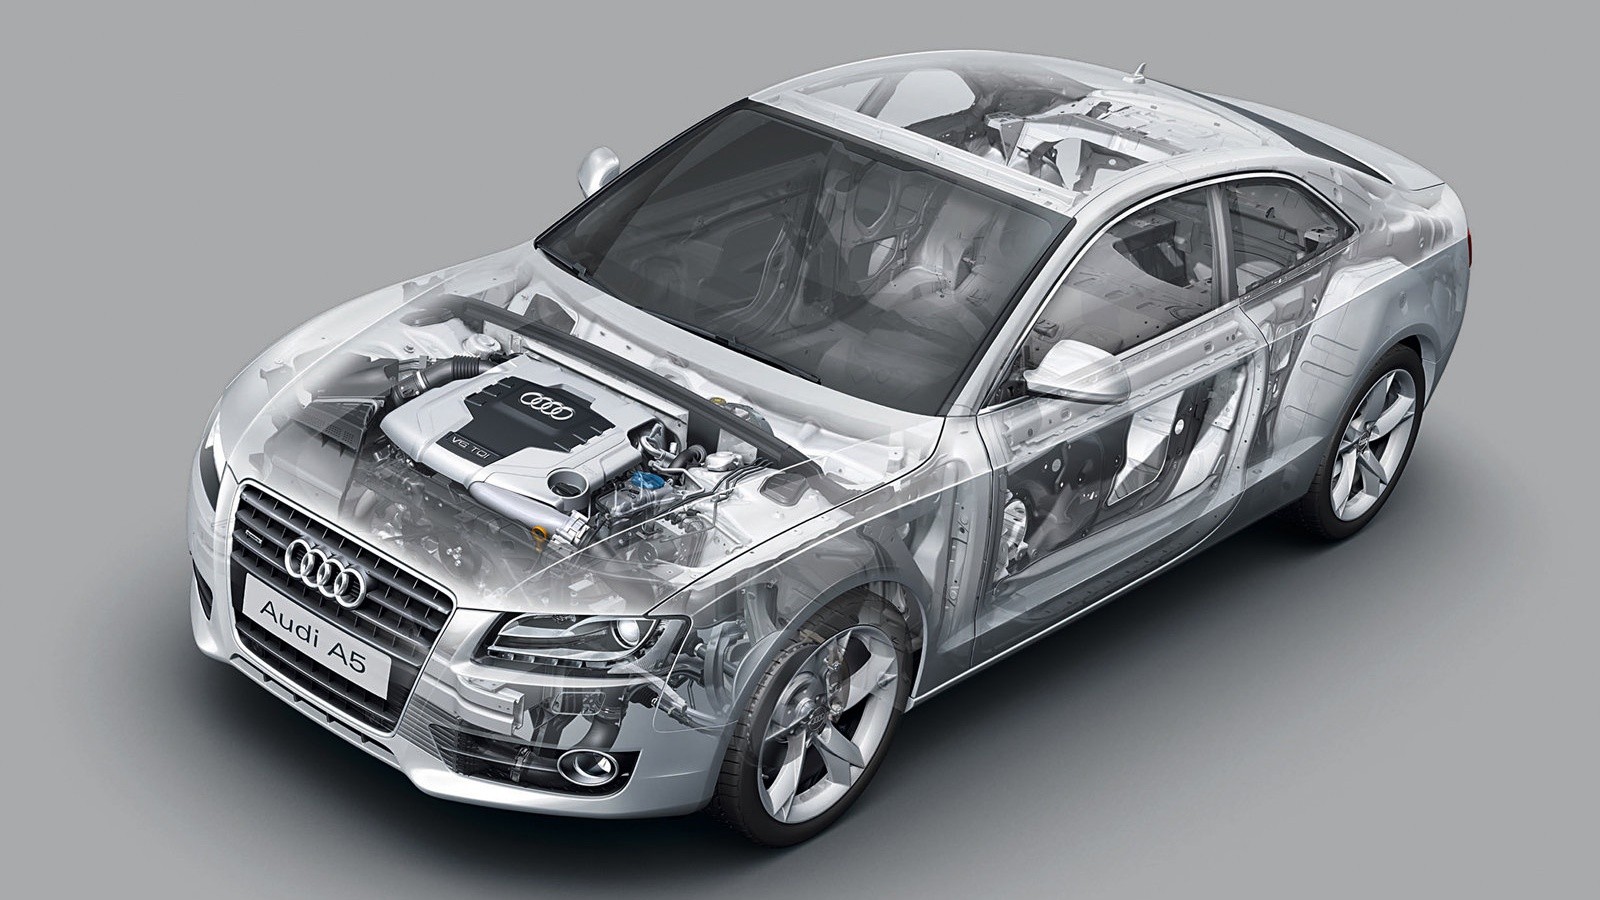 Audi-A5_3.0_TDI_quattro-2008-1600-20